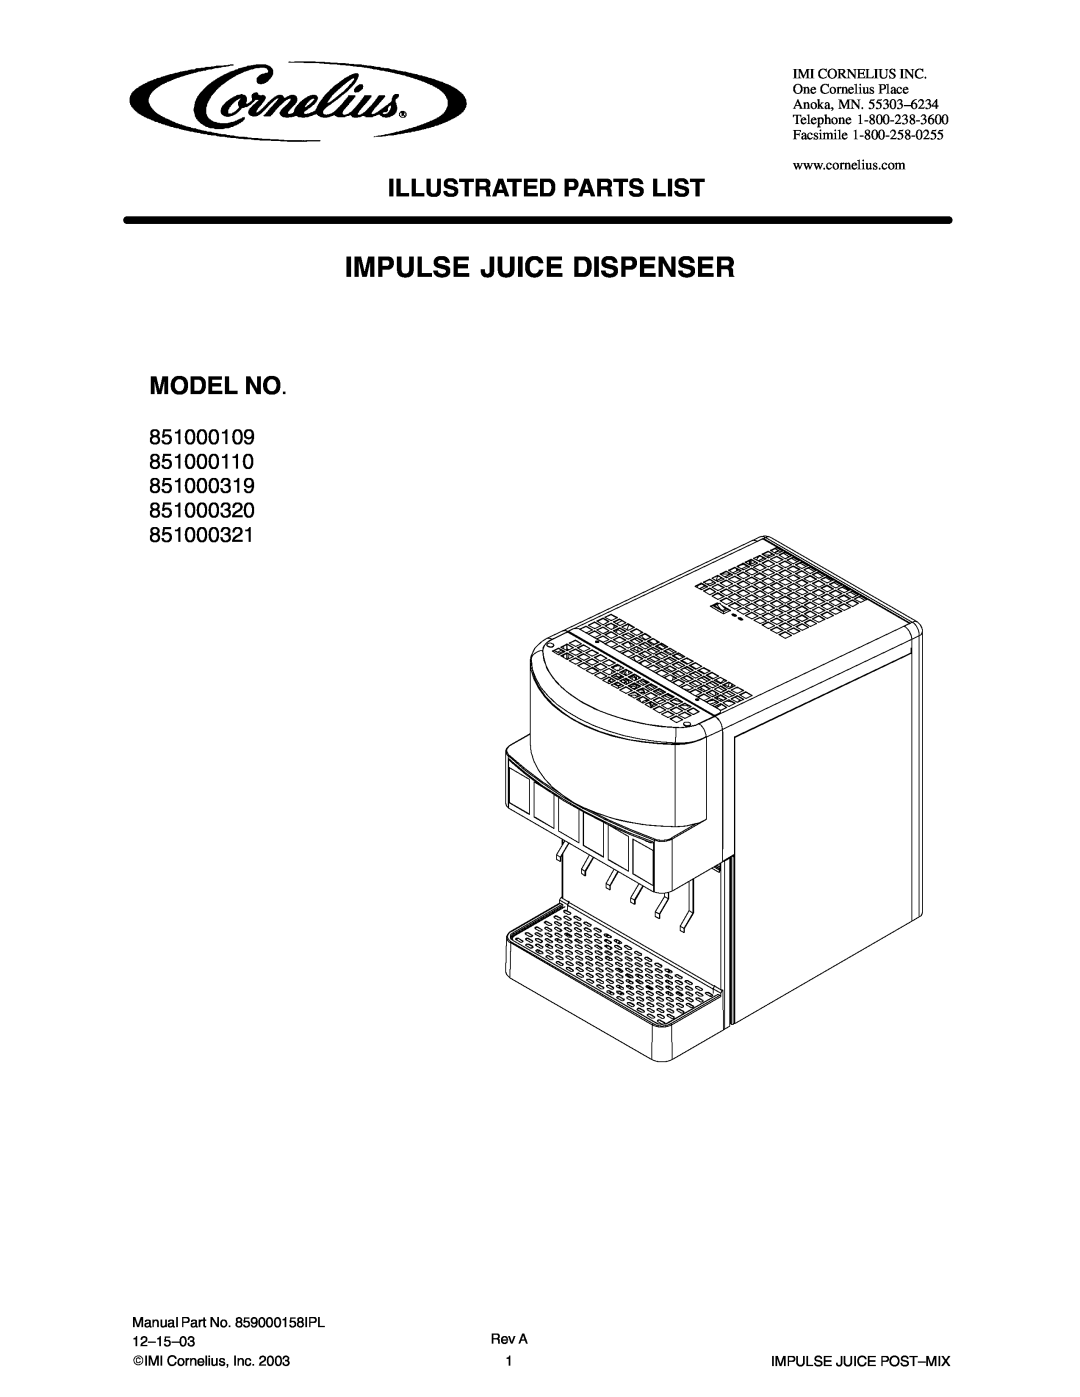 Panasonic manual Impulse Juice Dispenser, Illustrated Parts List, Model No, 851000109 851000110 851000319, Rev A 